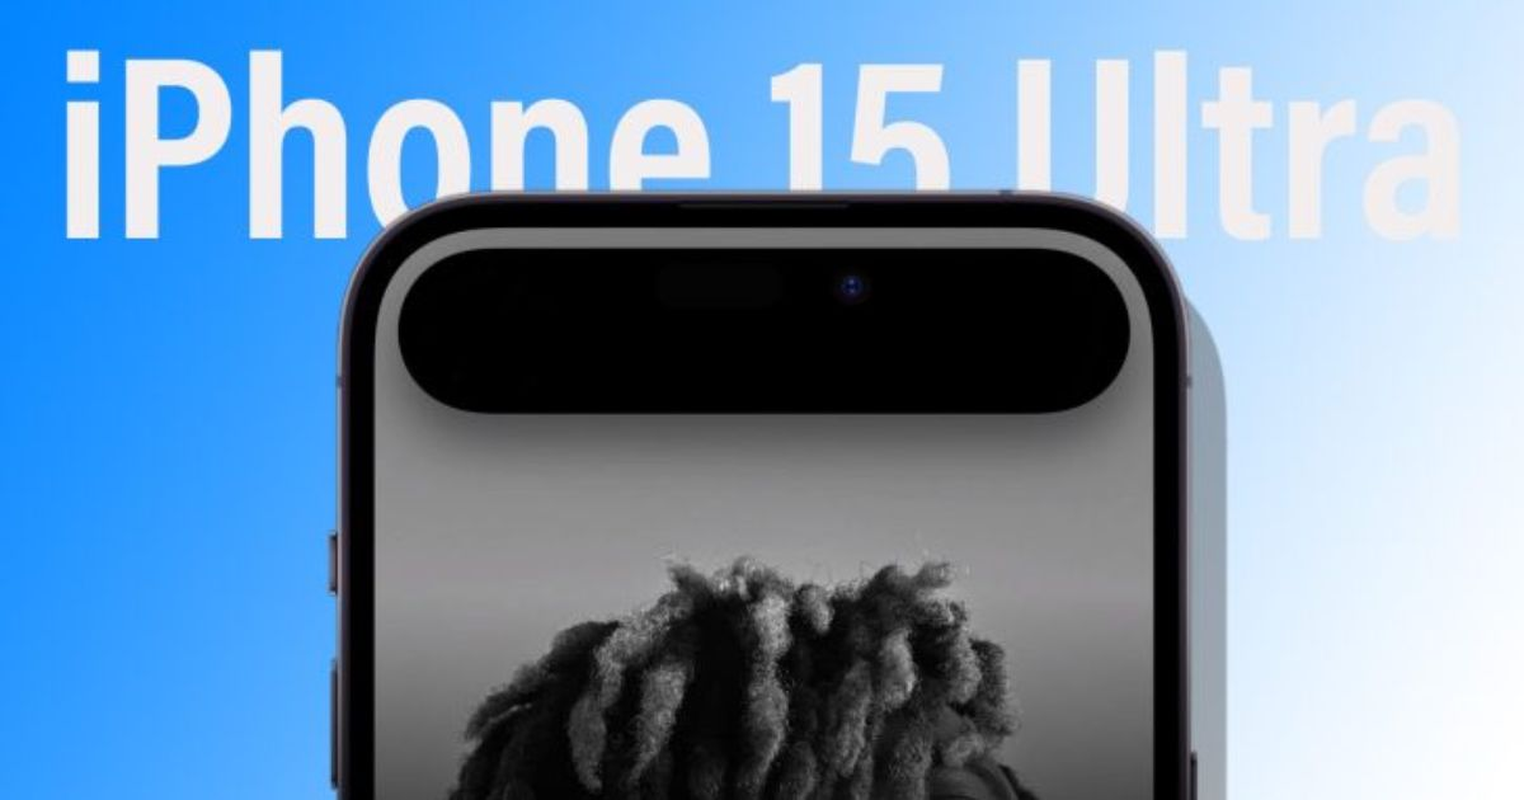 Lo chi tiet giup iPhone 15 Ultra la cuc pham nhiep anh cua Apple-Hinh-4